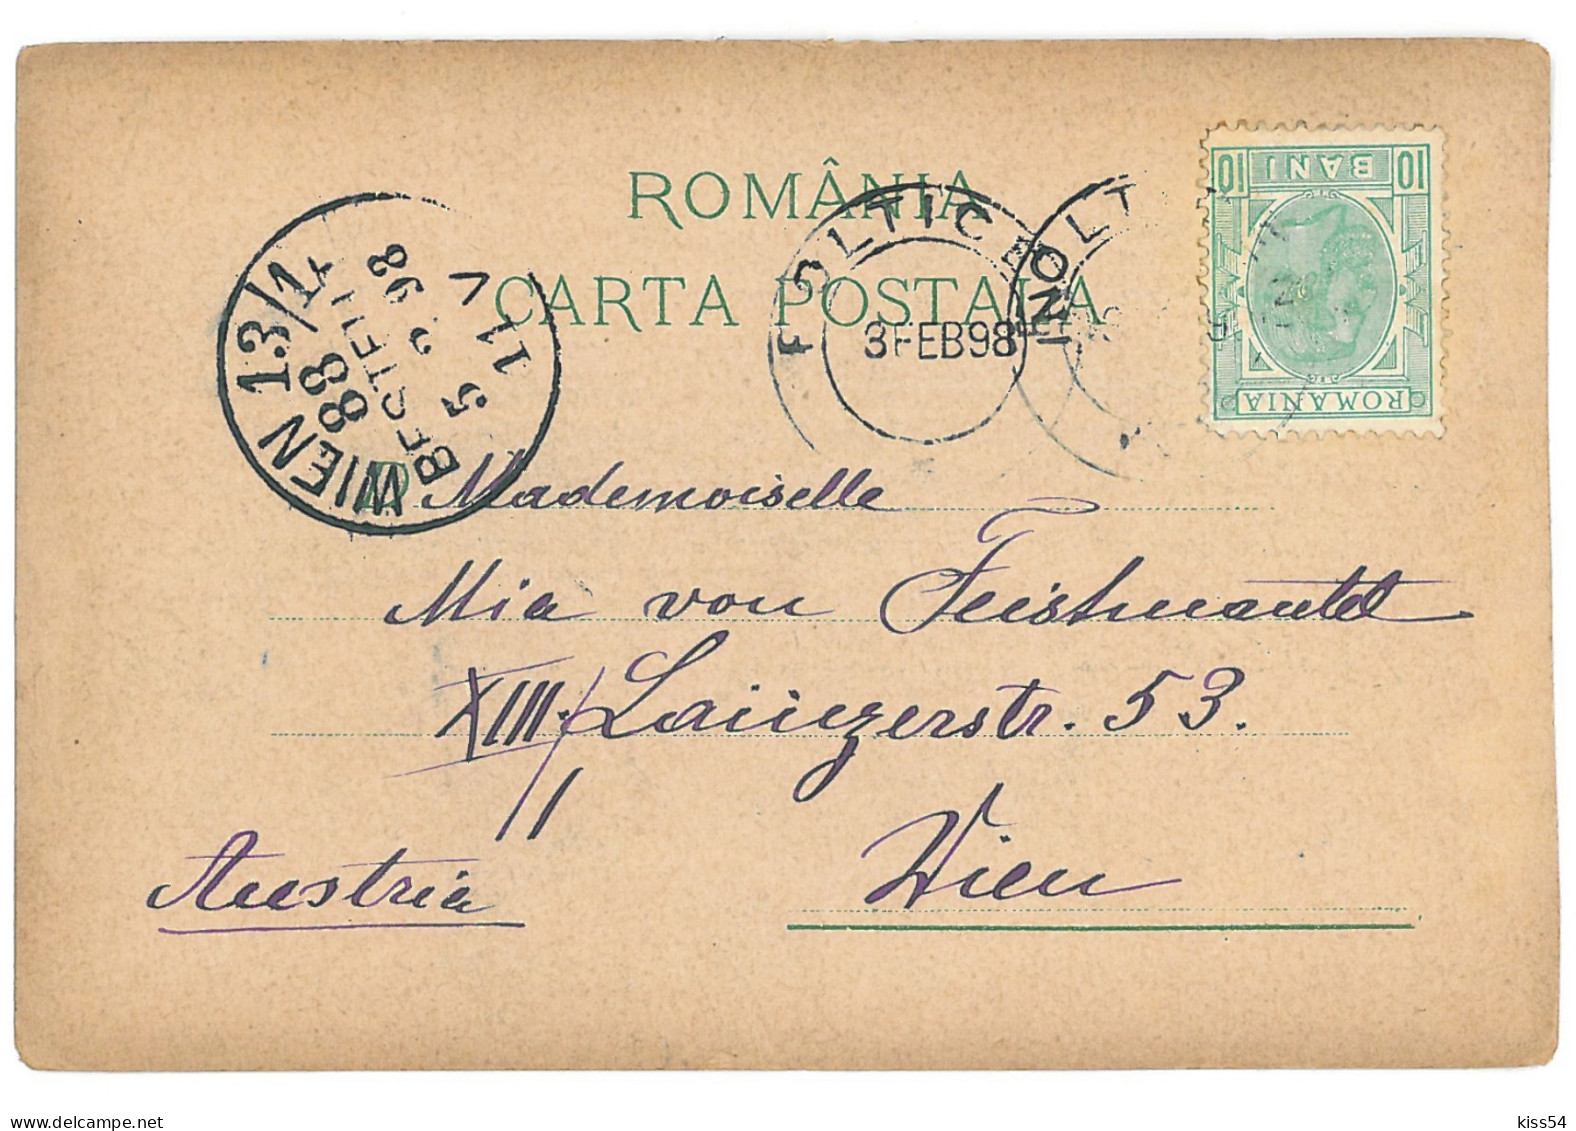 RO 77 - 12099 CONSTANTA, Litho, Romania - Old Postcard - Used - 1899 - Romania